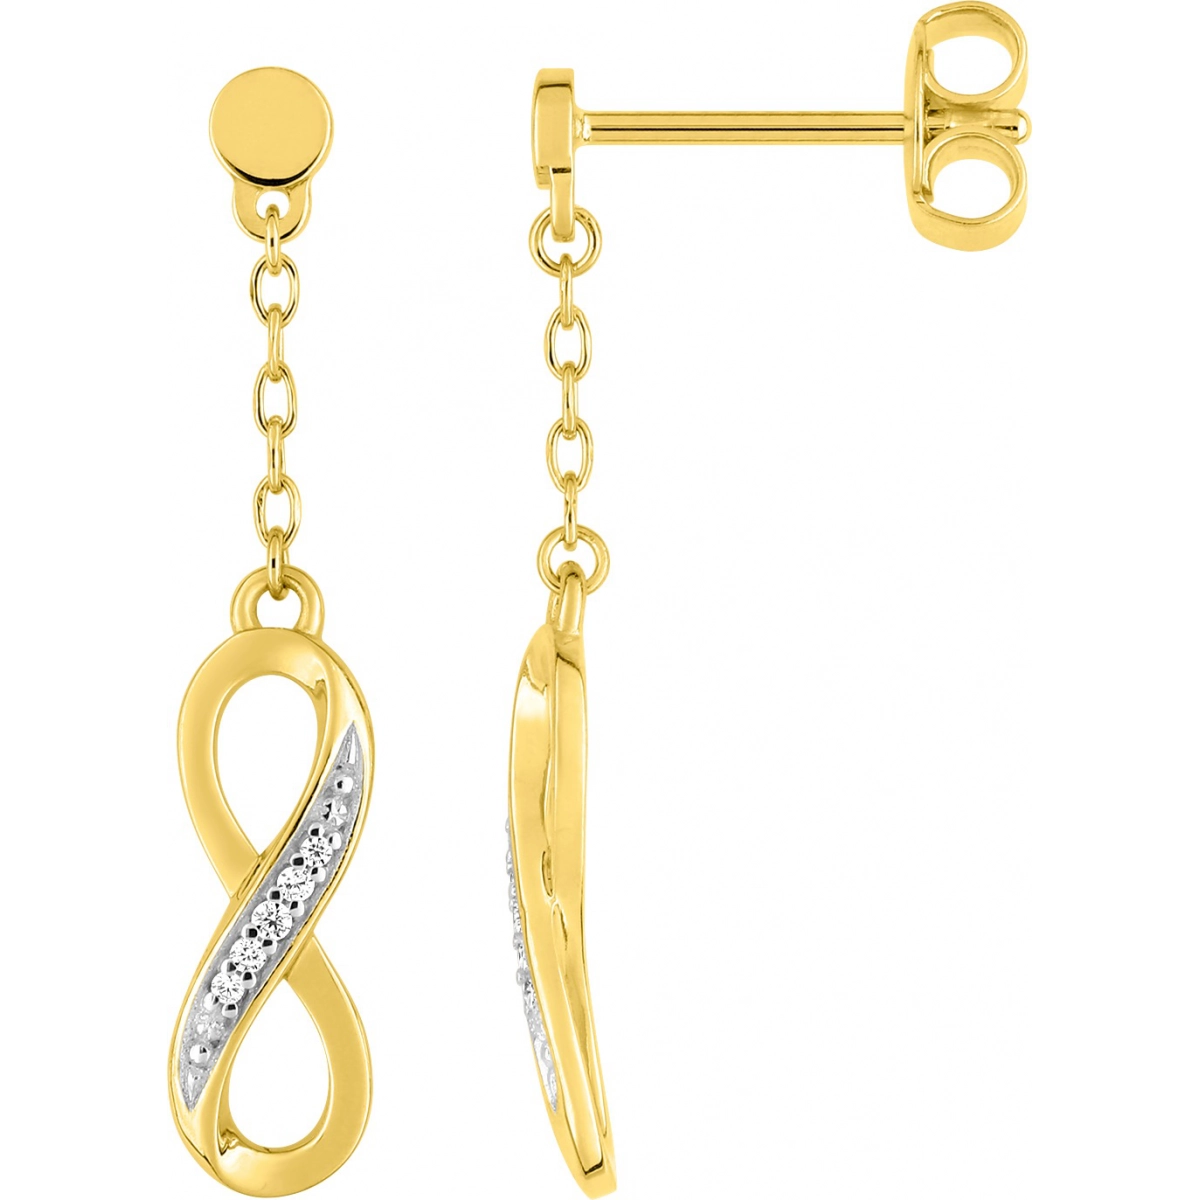 Earrings pair cz & rhod g.pl.Brass Lua Blanca  CUZC01G 